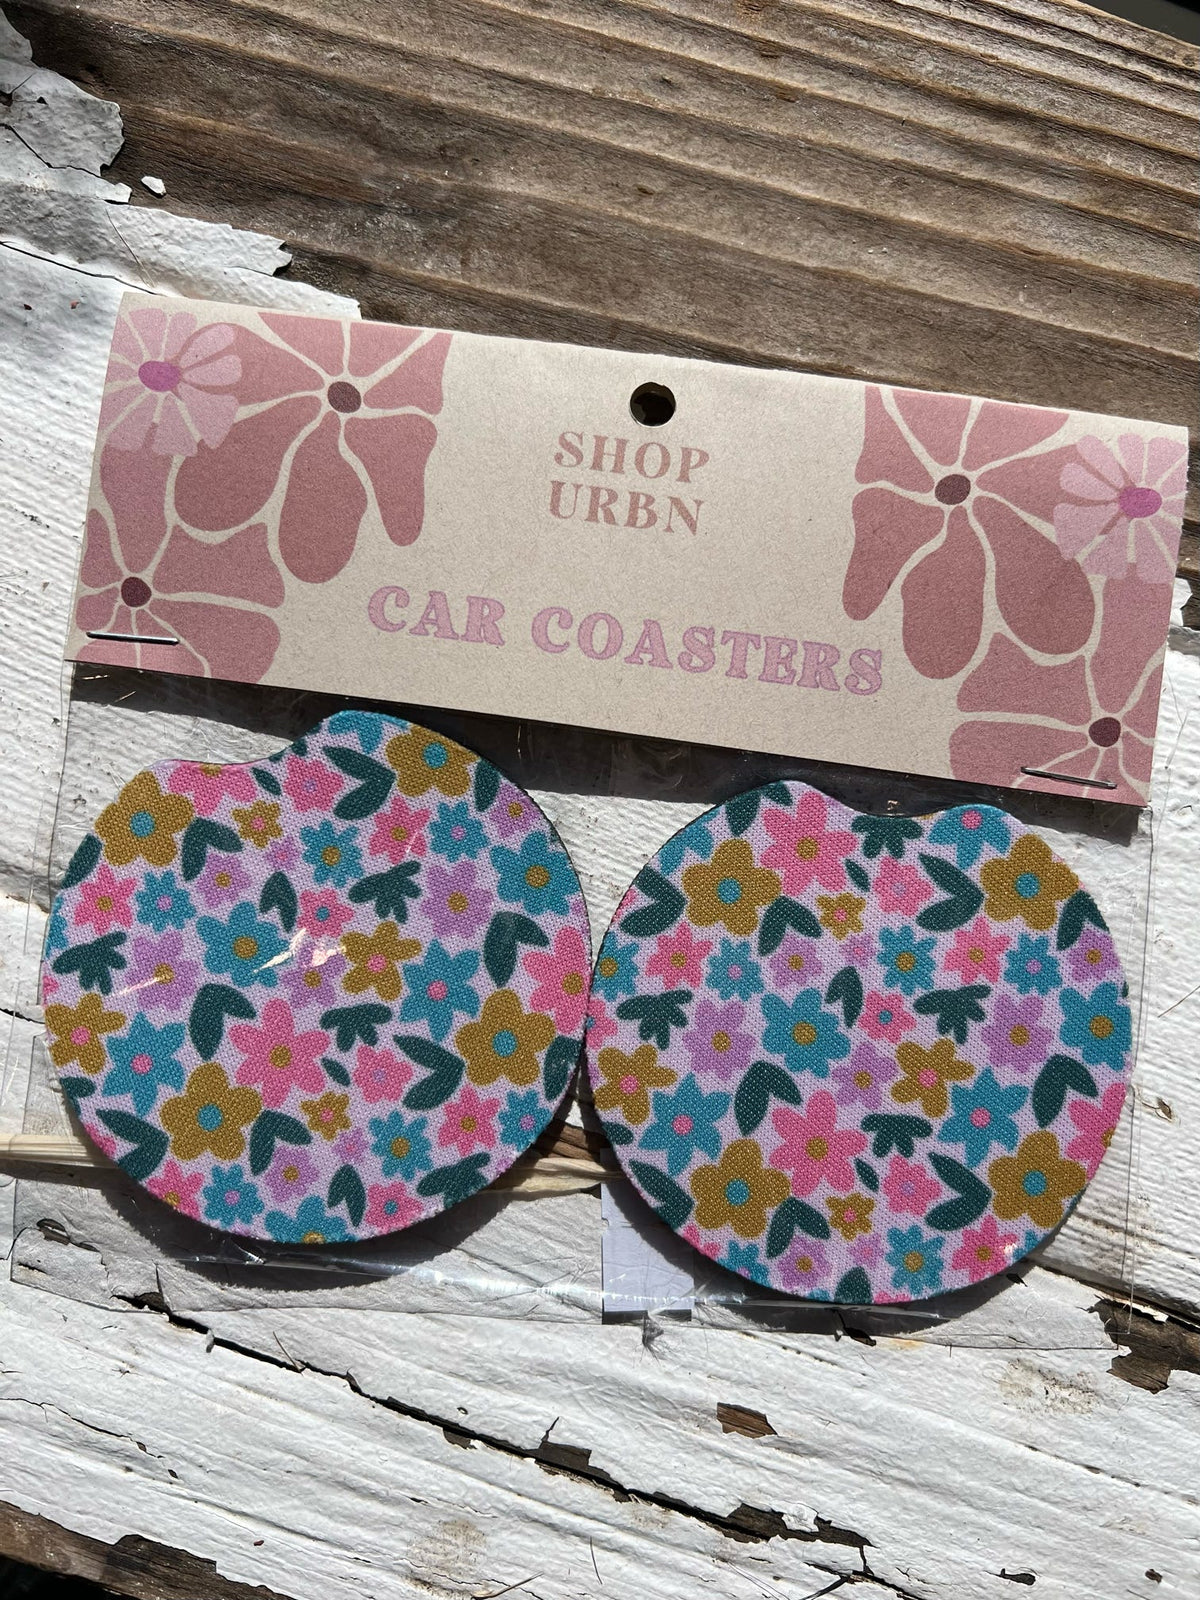 Car Coasters